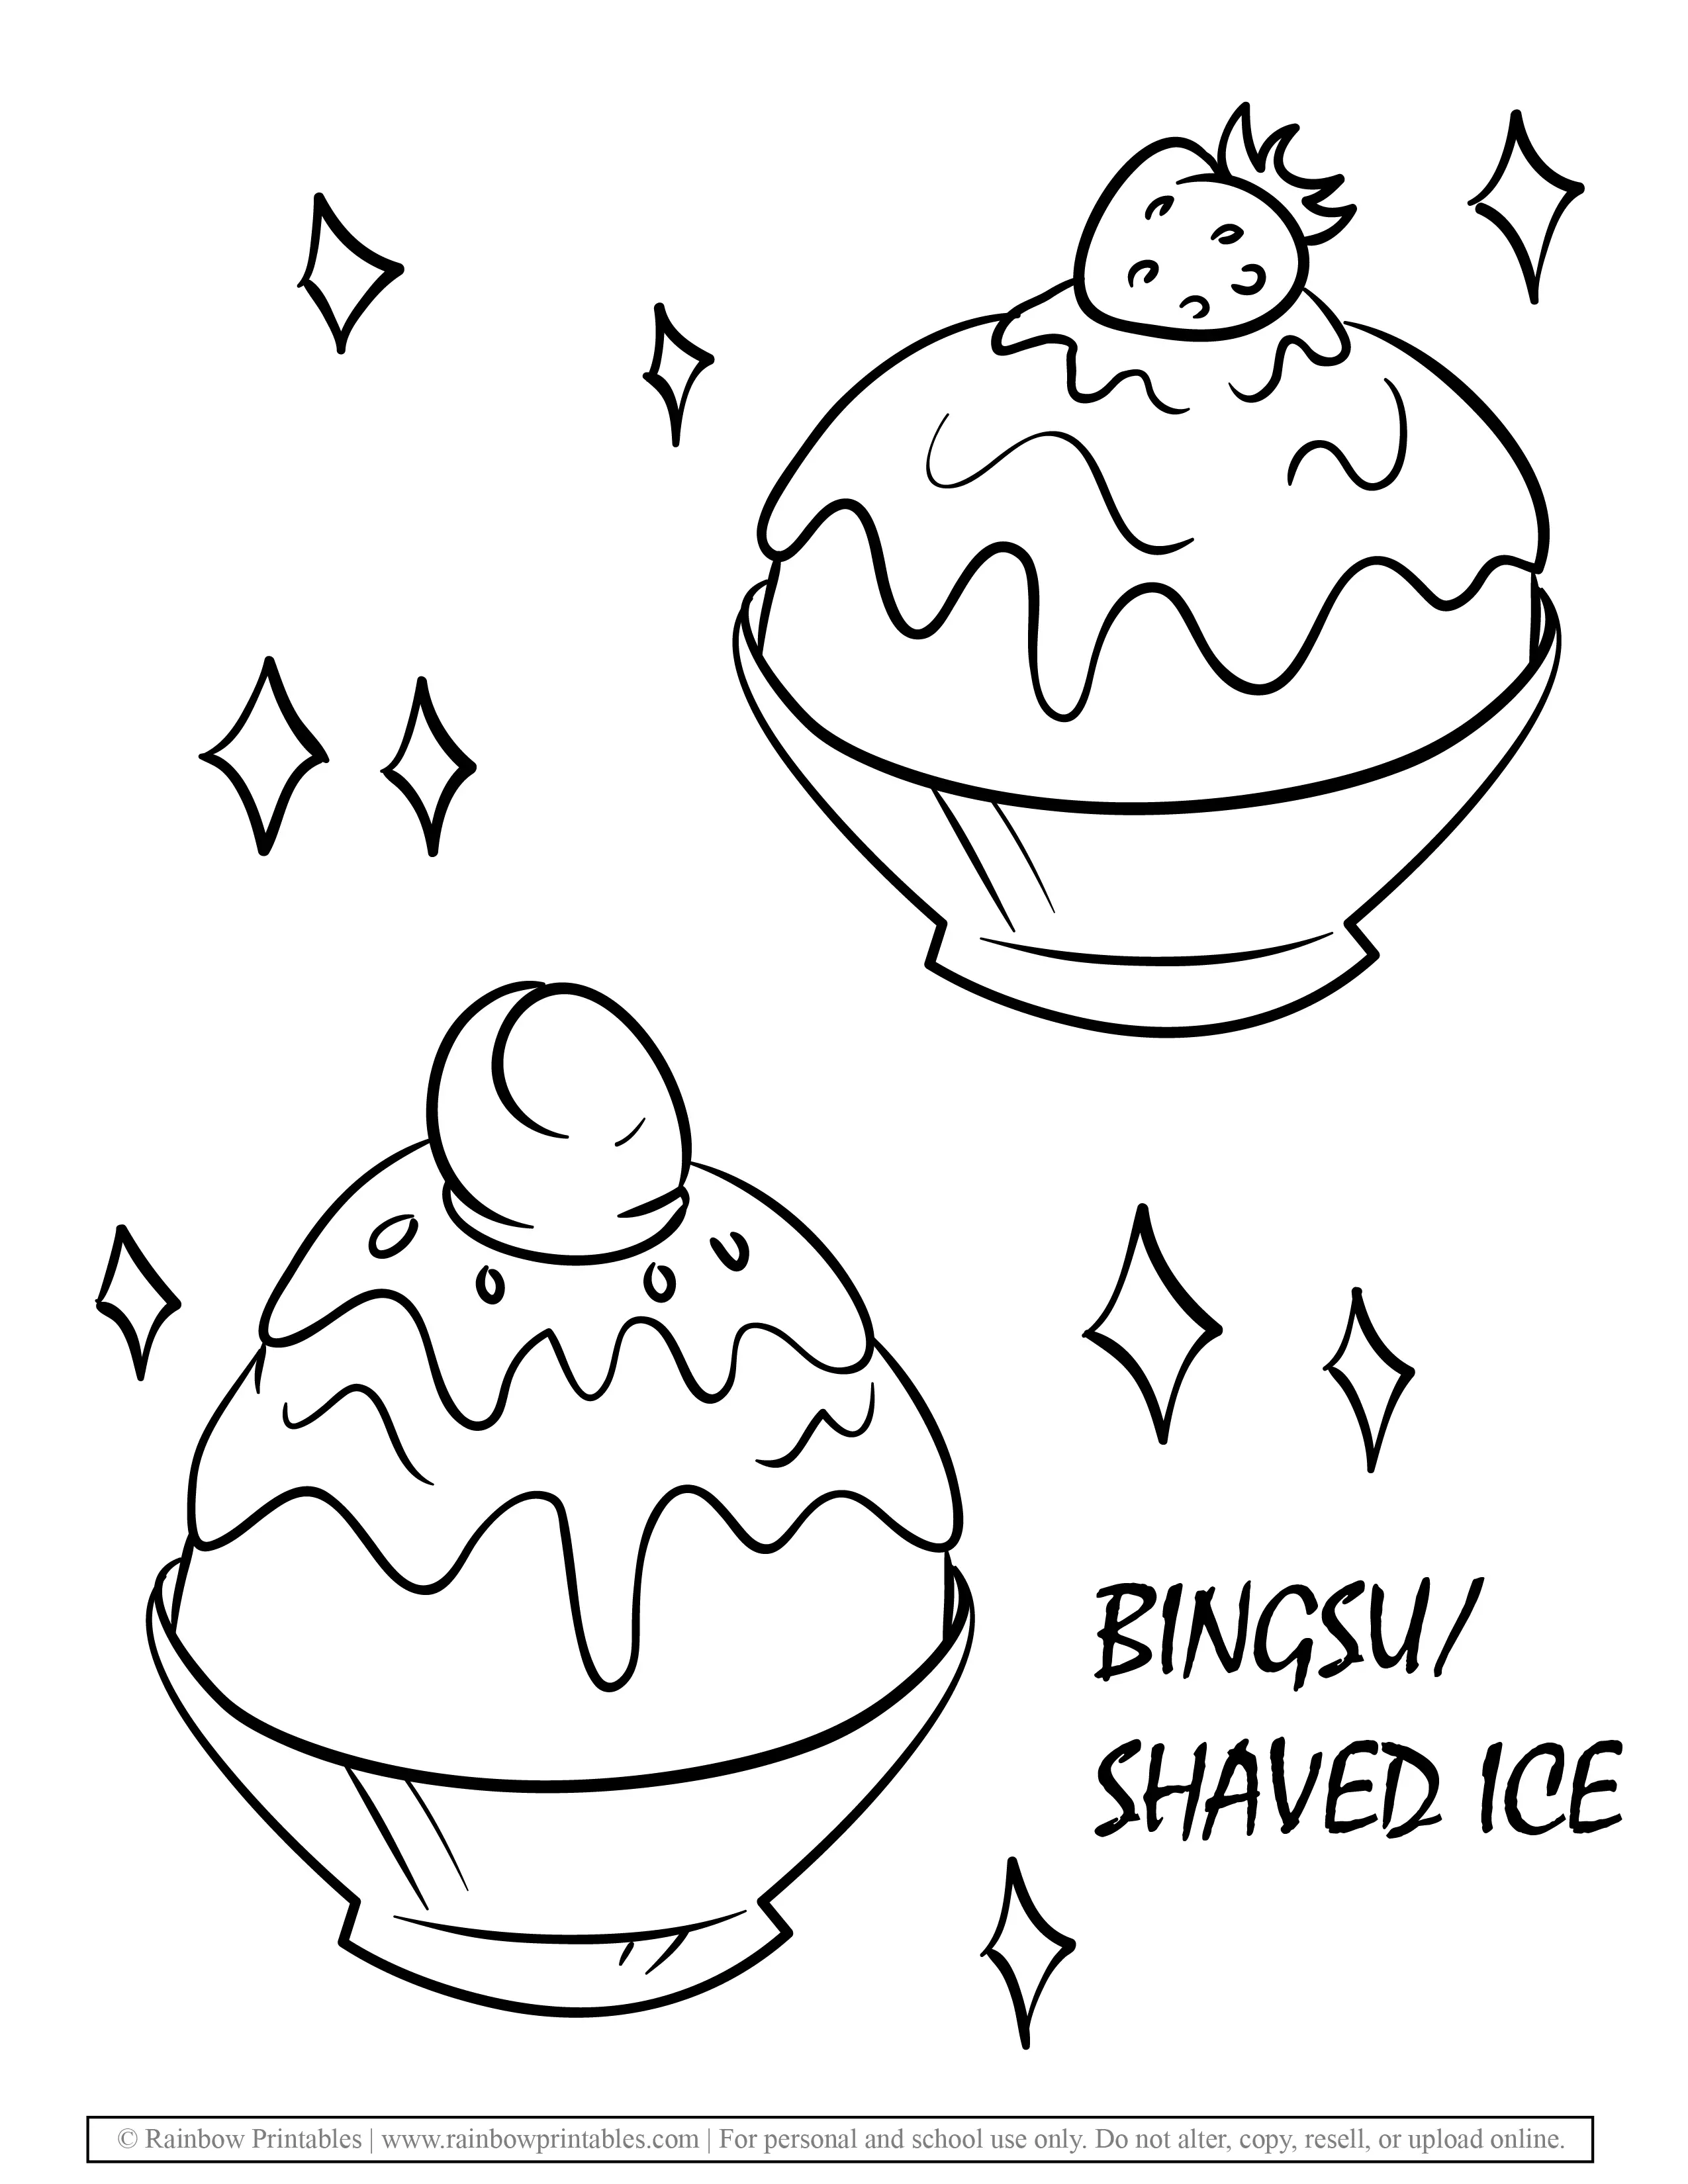 KOREAN Bingsu shaved Exotic treat Ice Asian Dessert Coloring Pages for Kids Sprinkle of Fruit